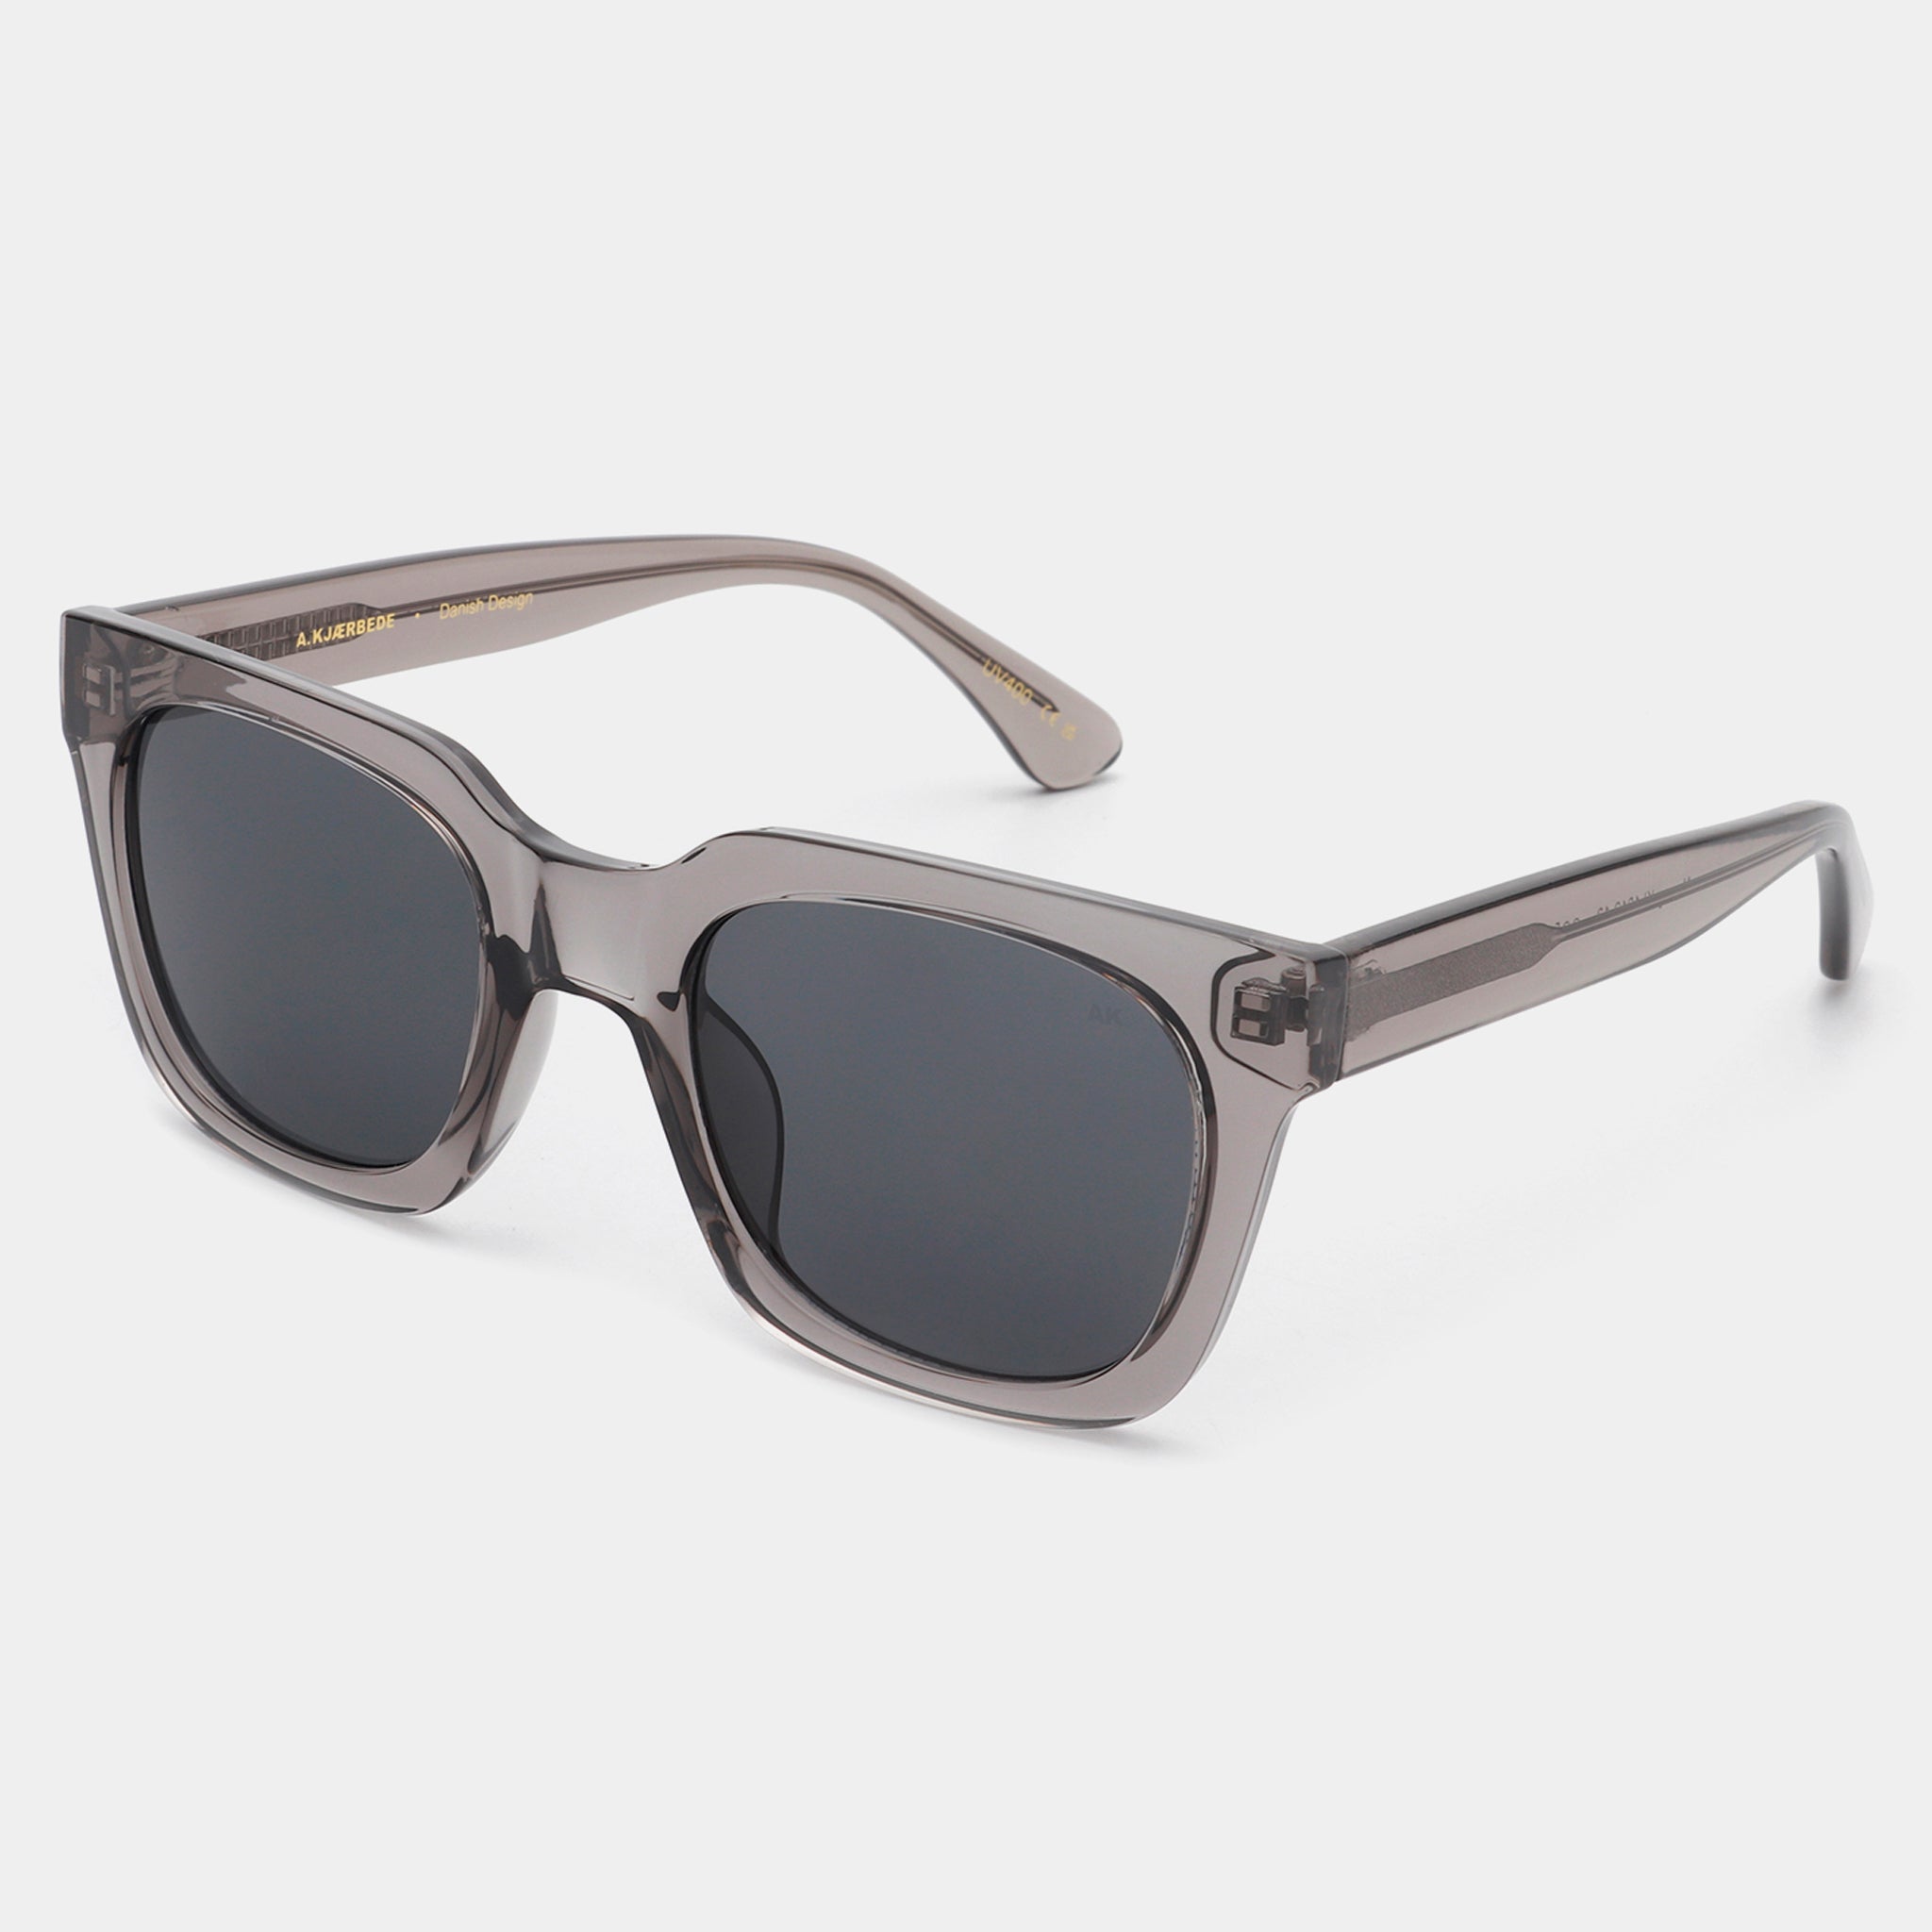 A.Kjaerbede Sunglasses - Nancy - Grey Transparent